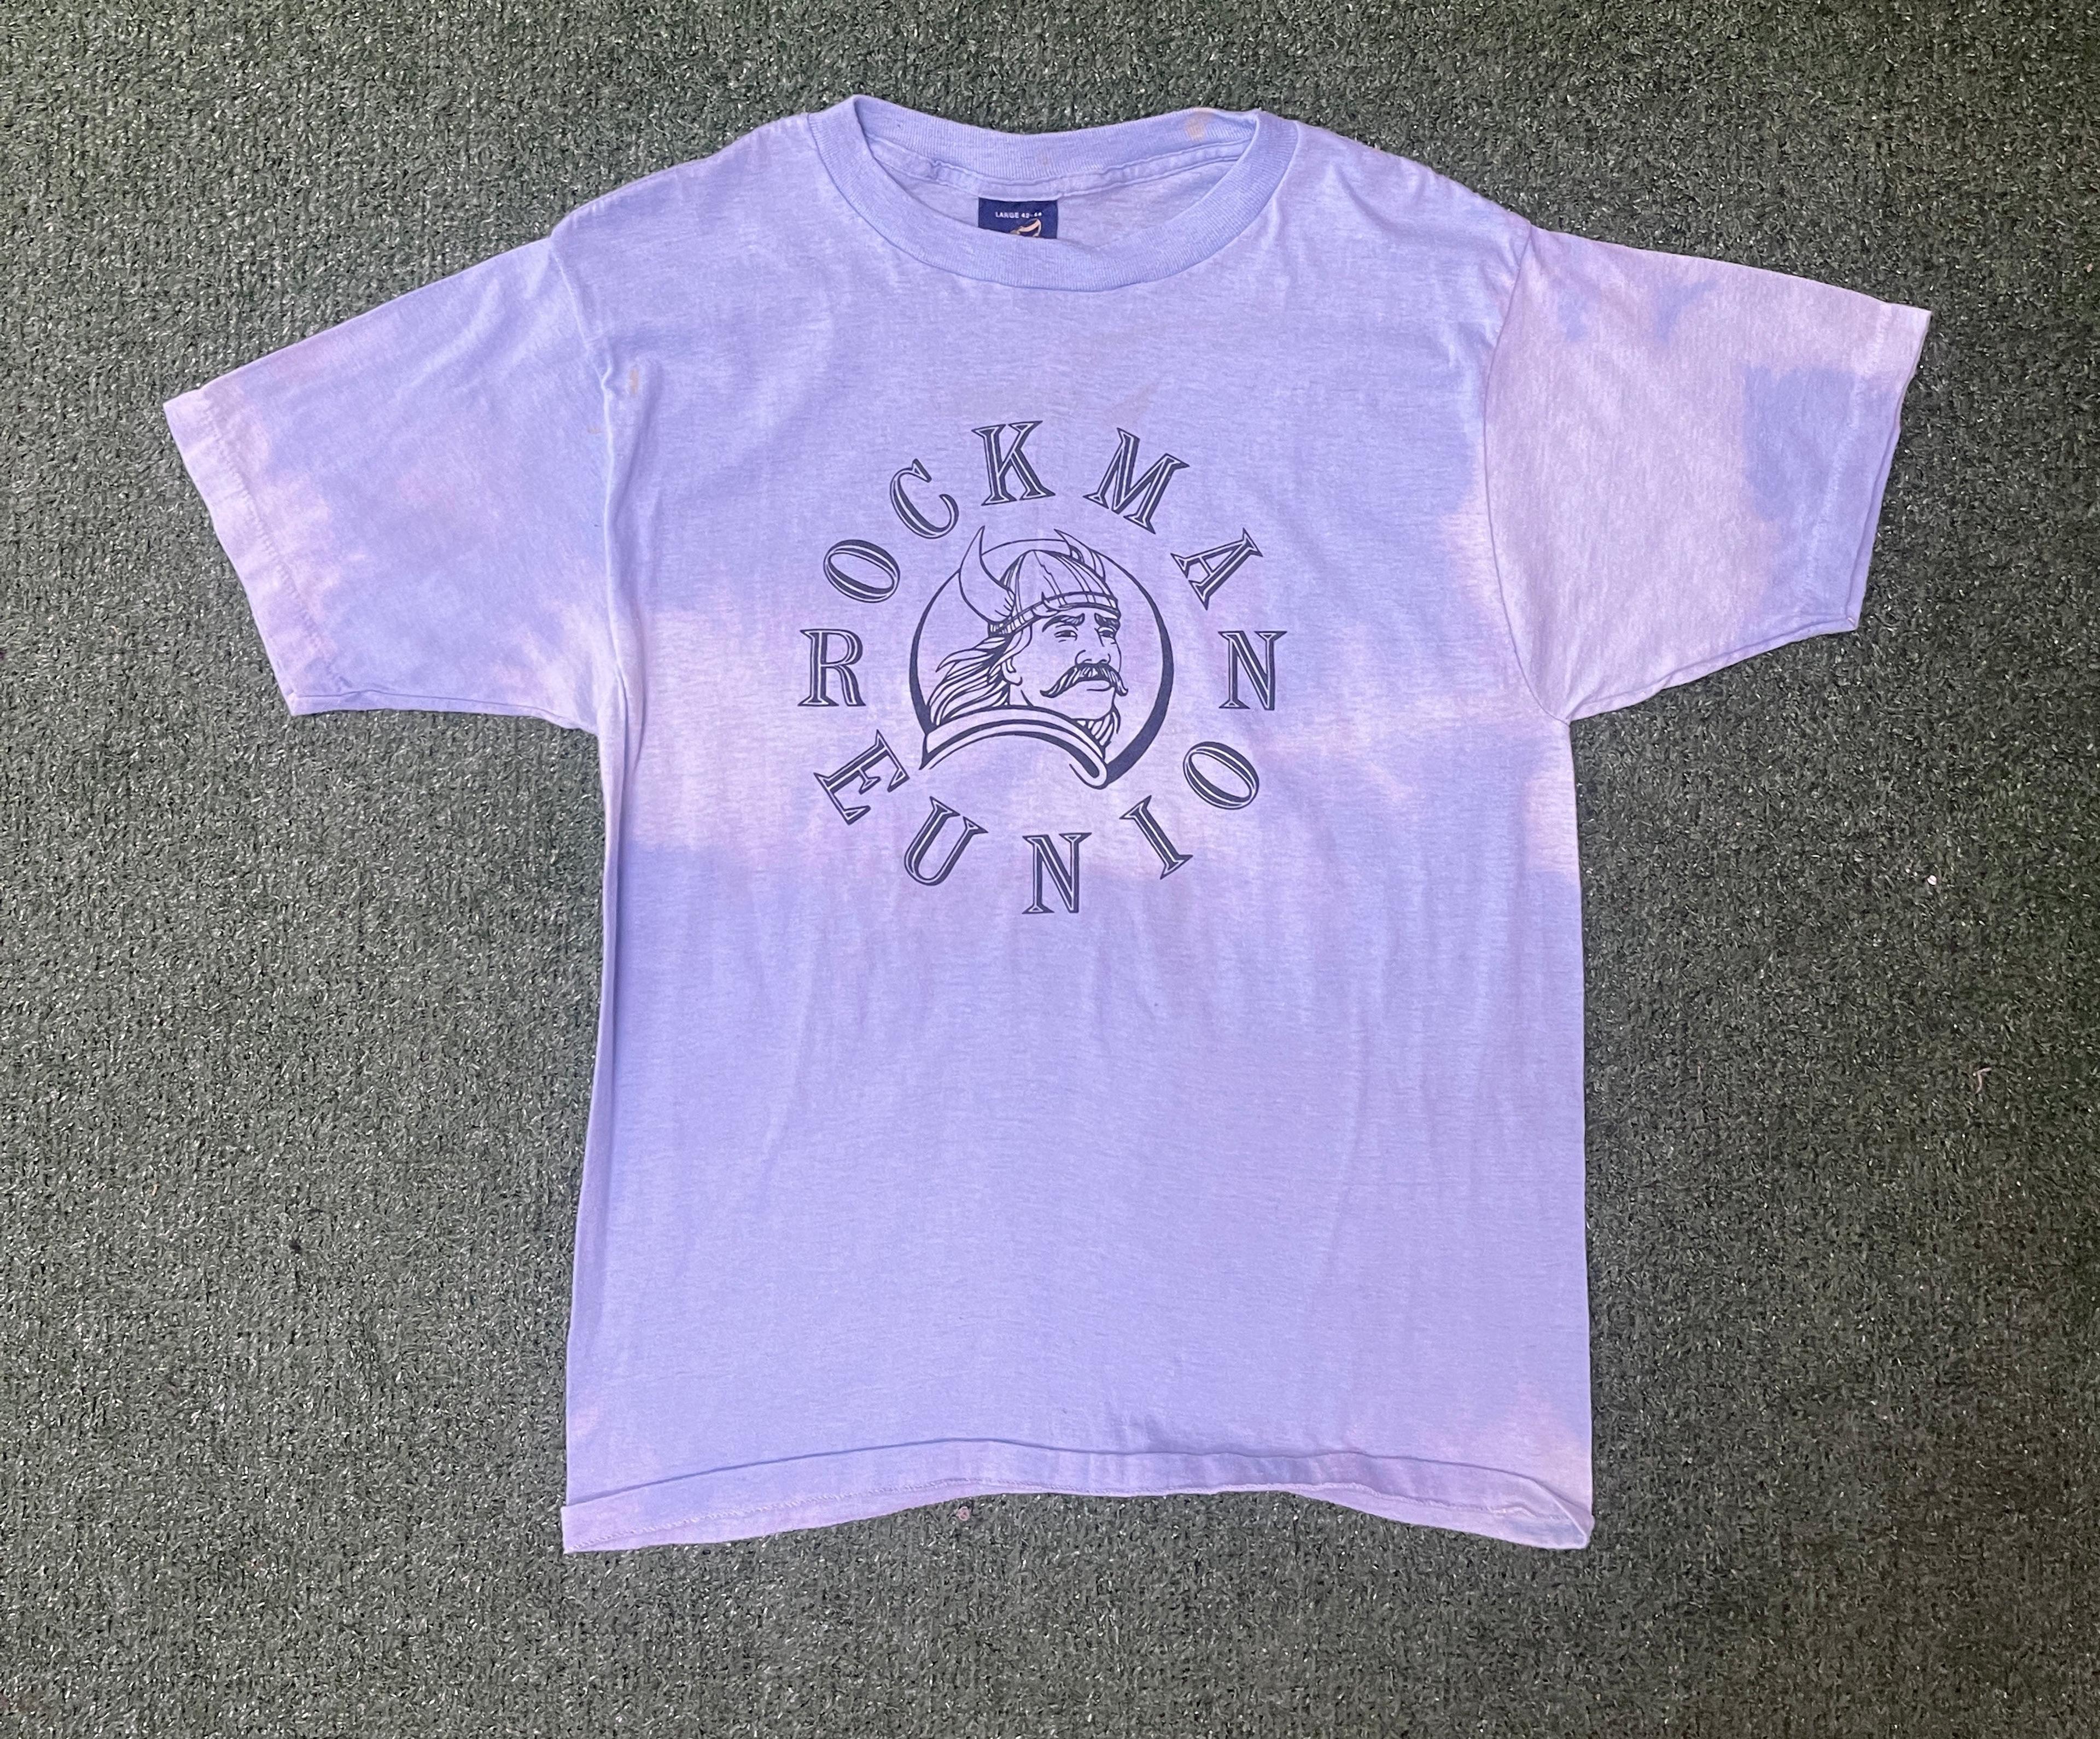 Vintage 80s Rockman Reunion Shirt